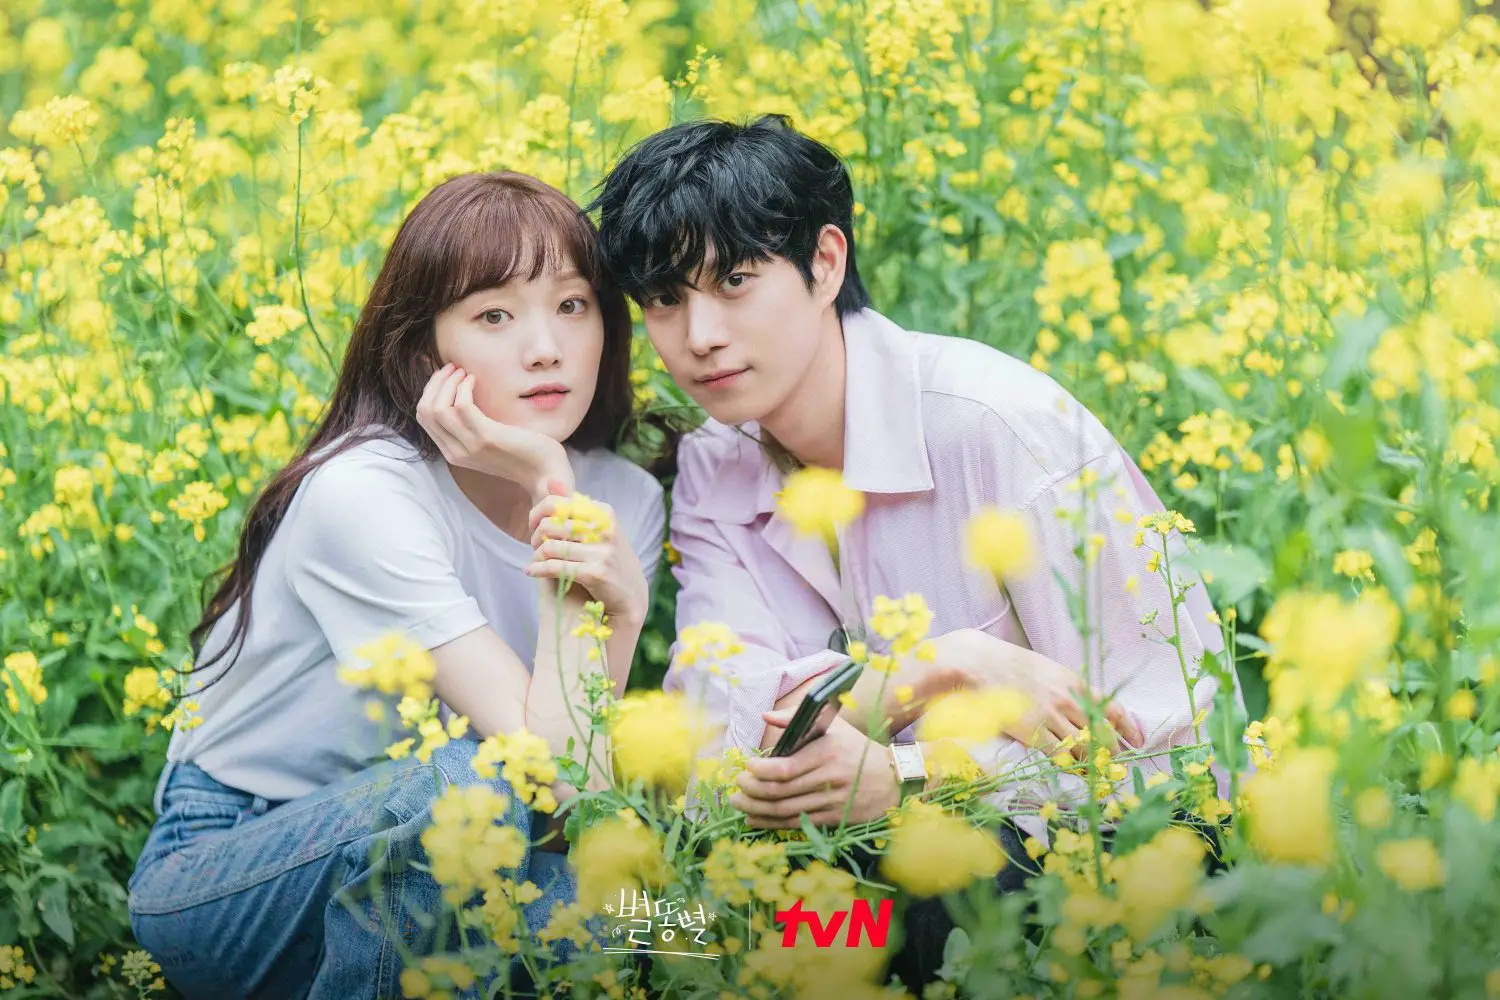 K-Drama Review: "Shooting Stars" Glisteningly Tells Endearing Love Story Behind Spotlights - kdramadiary